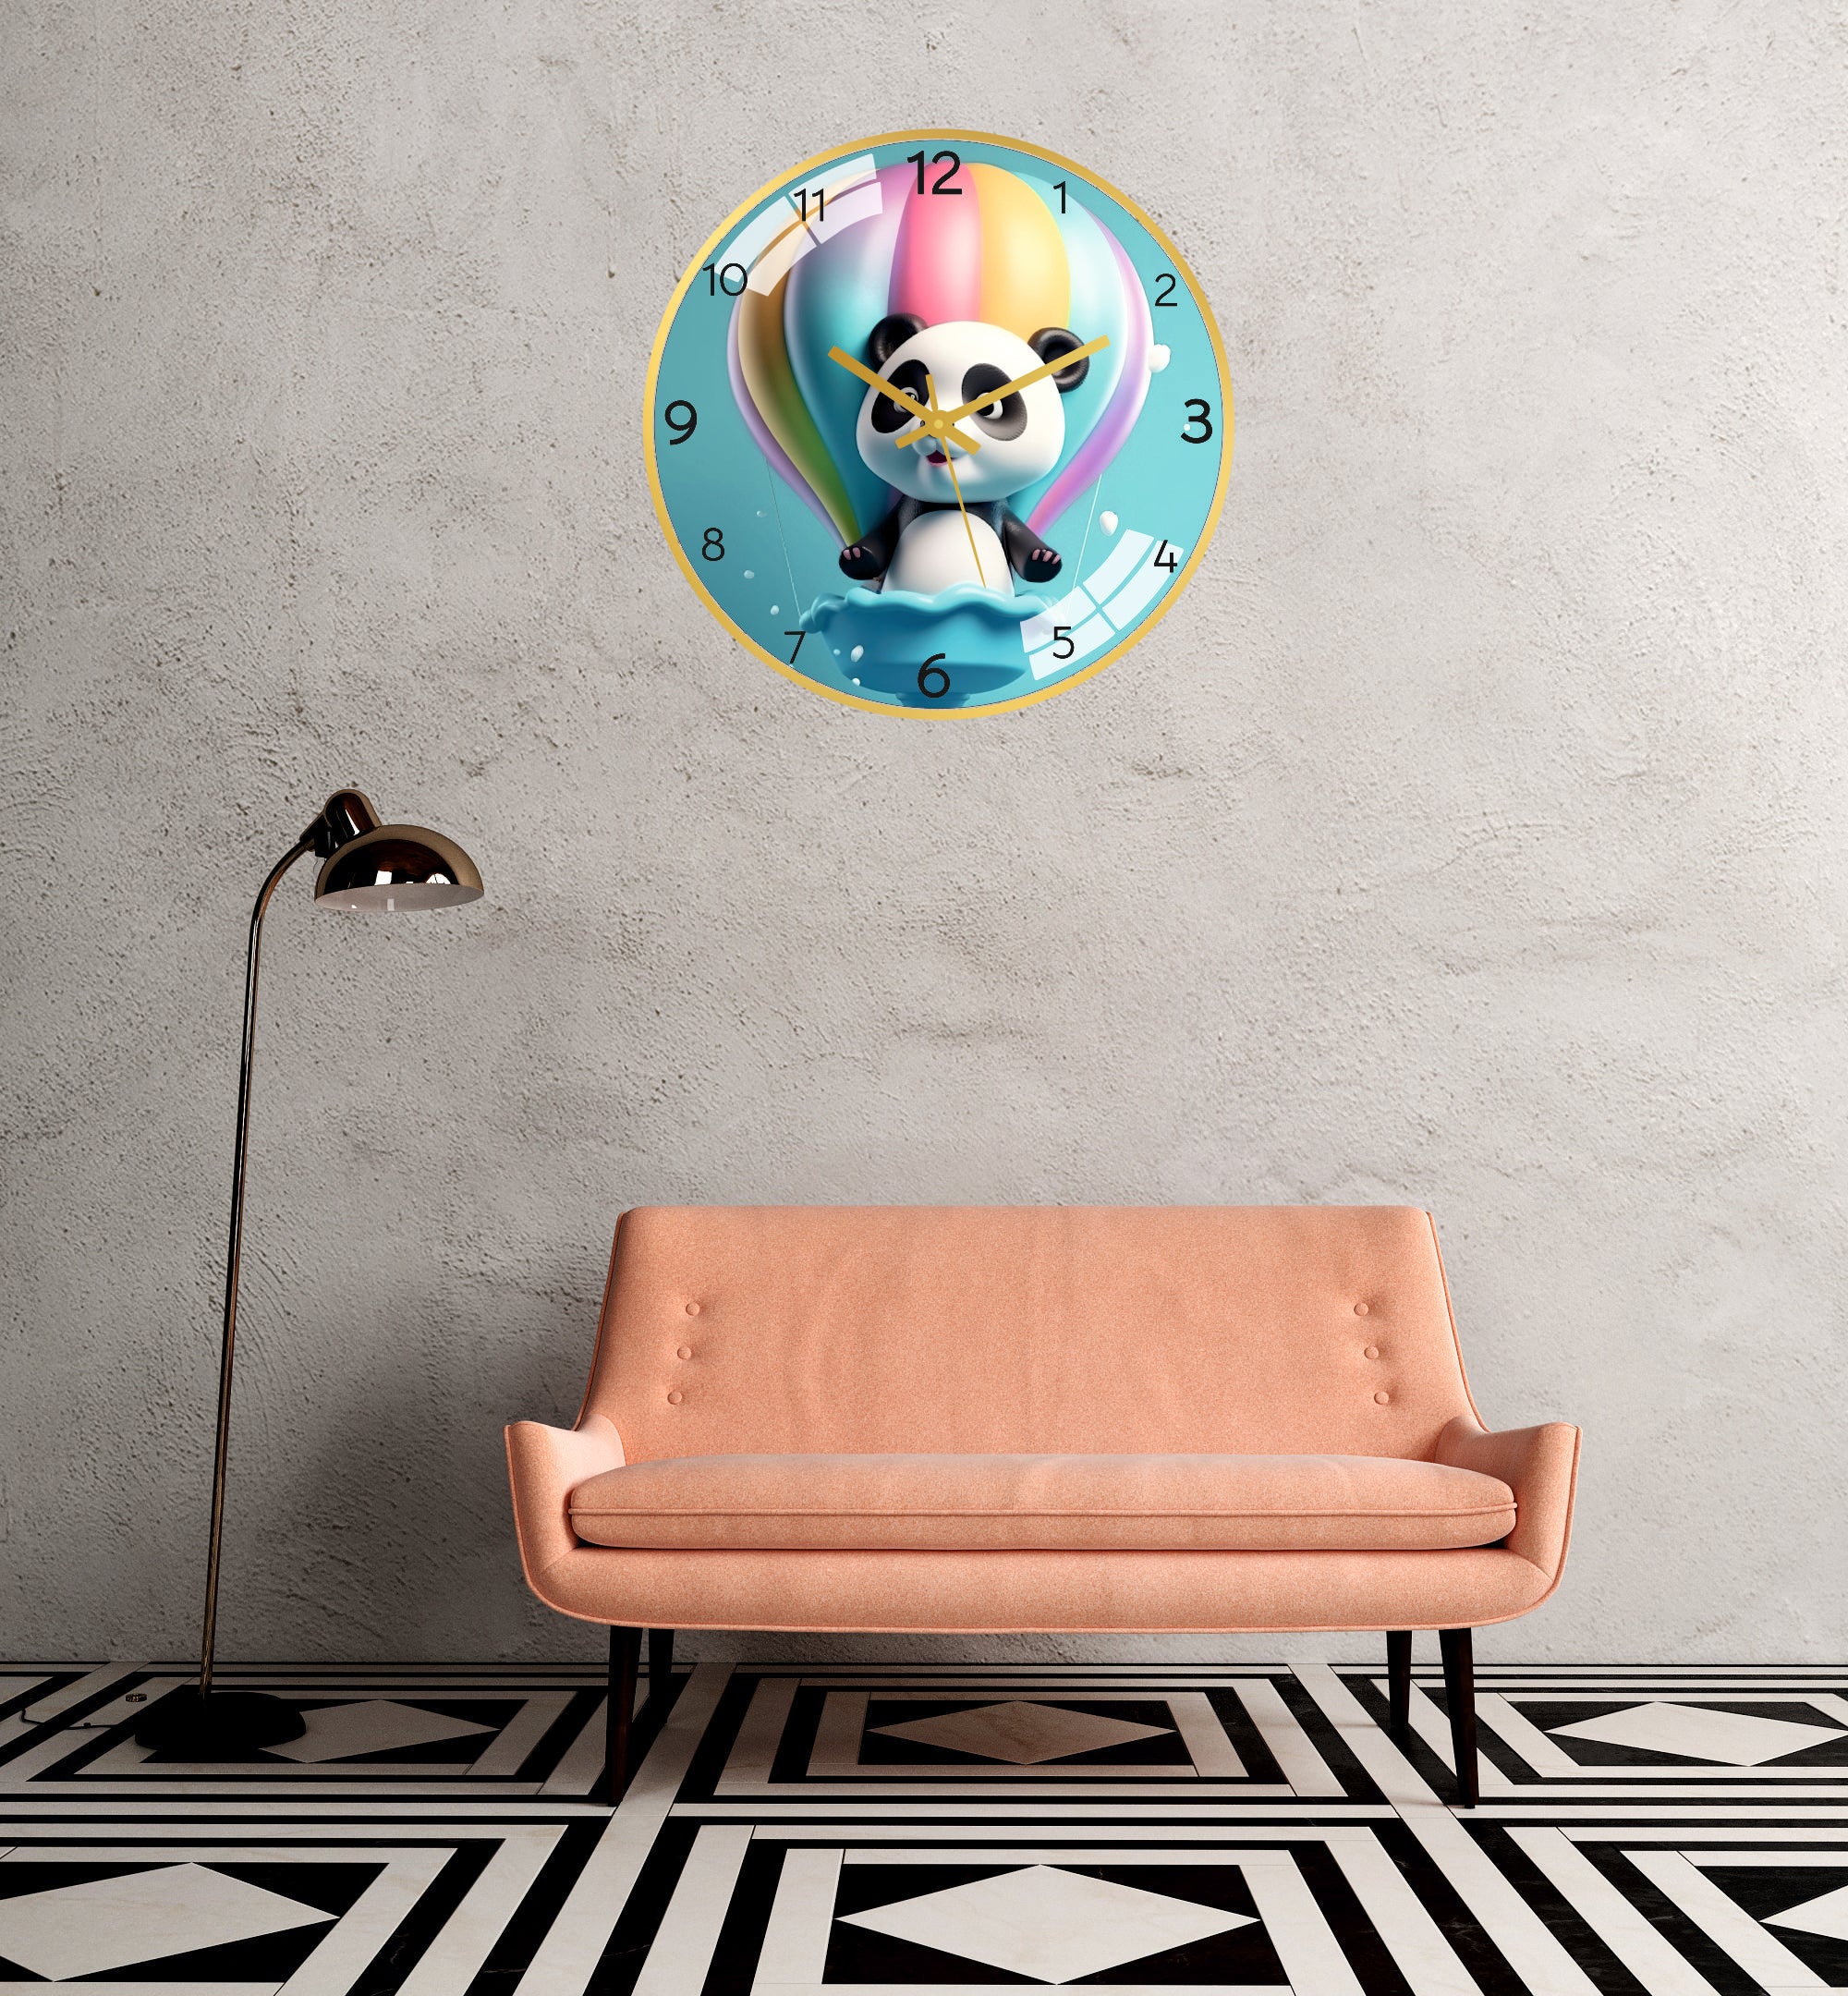 Cute Panda Holding Balloon Wall Clock